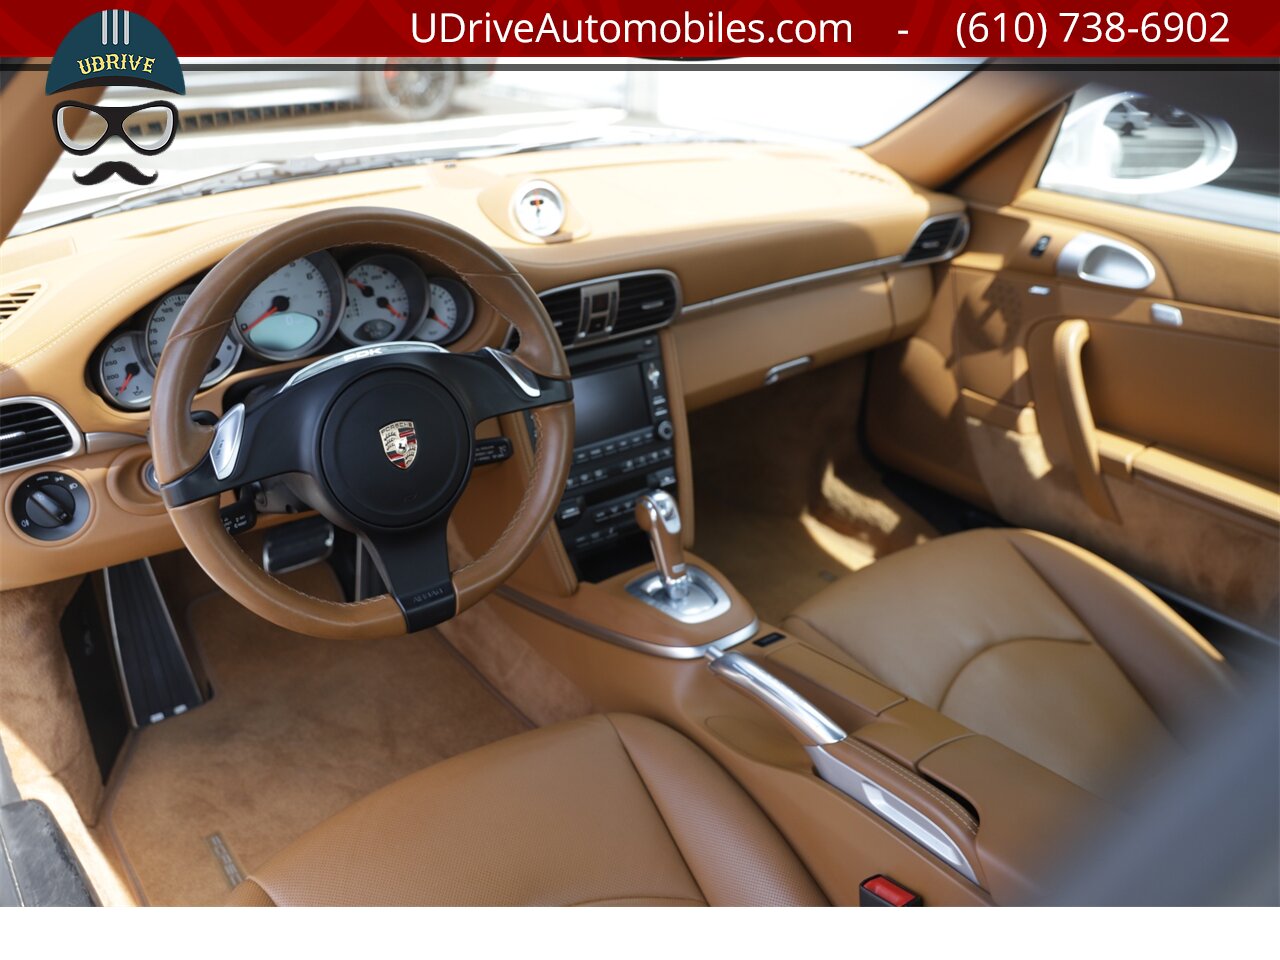 2011 Porsche 911 S 997.2 PDK Chrono Rare Color 21k Miles Sprt Susp  Diff Lock Vent Seats $113 MSRP - Photo 28 - West Chester, PA 19382